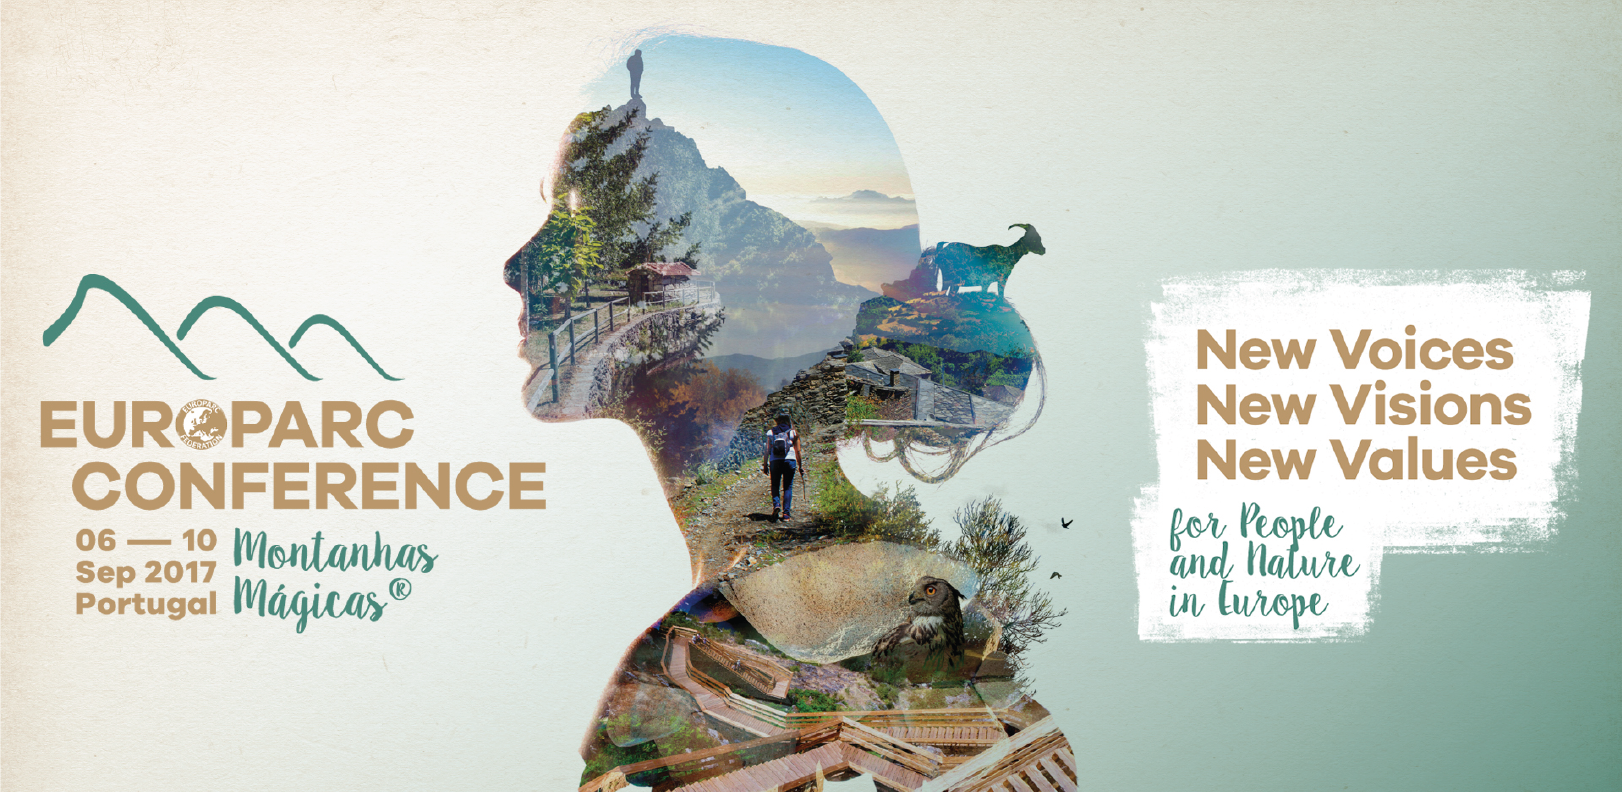 EUROPARC Conference 2017, magic mountains, portugal, montanhas magicas